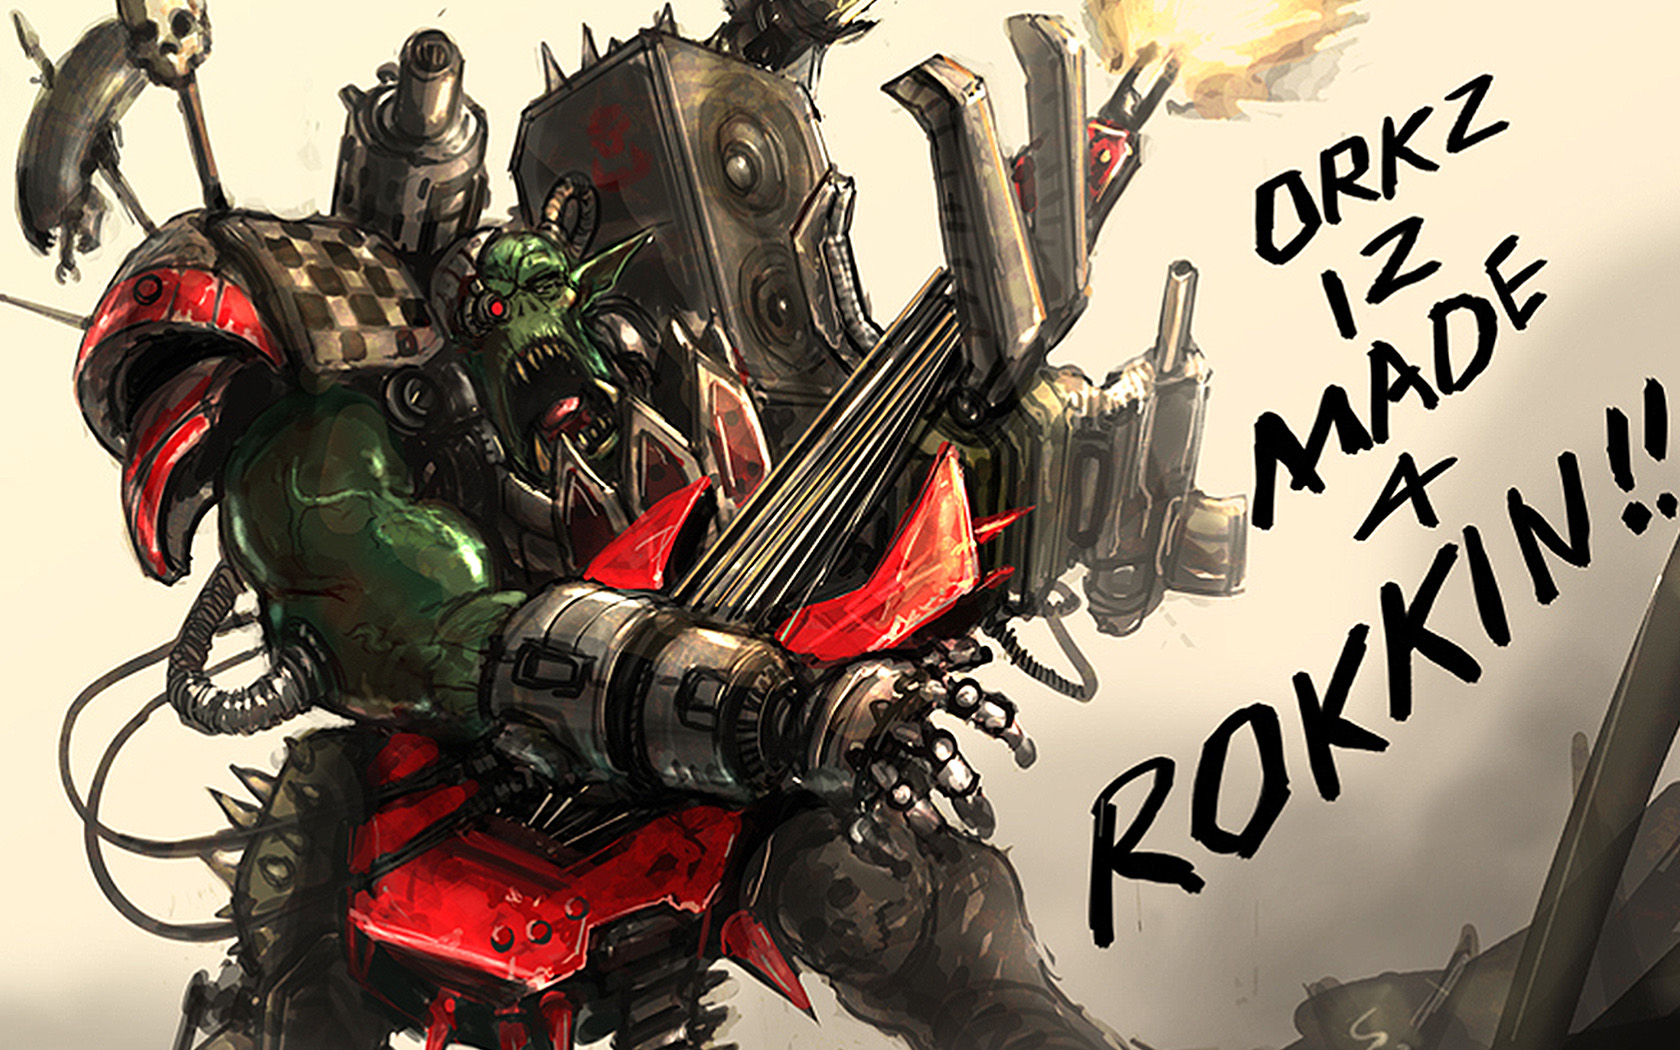 Ork from Warhammer 40k